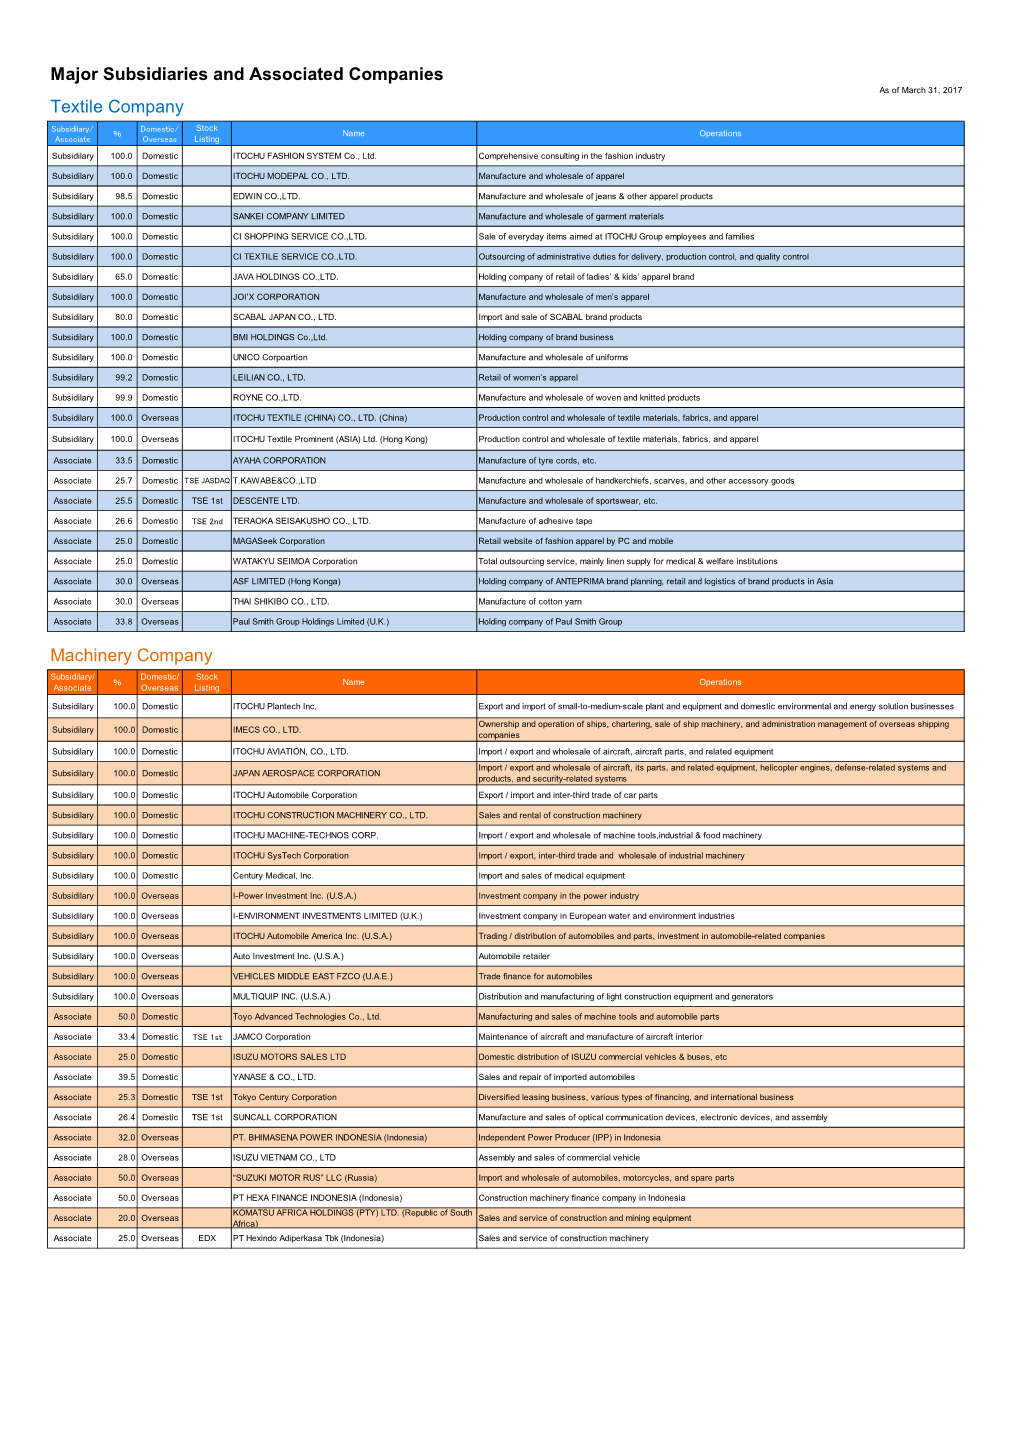 Major Subsidiaries and Associated Companies (PDF 60KB)